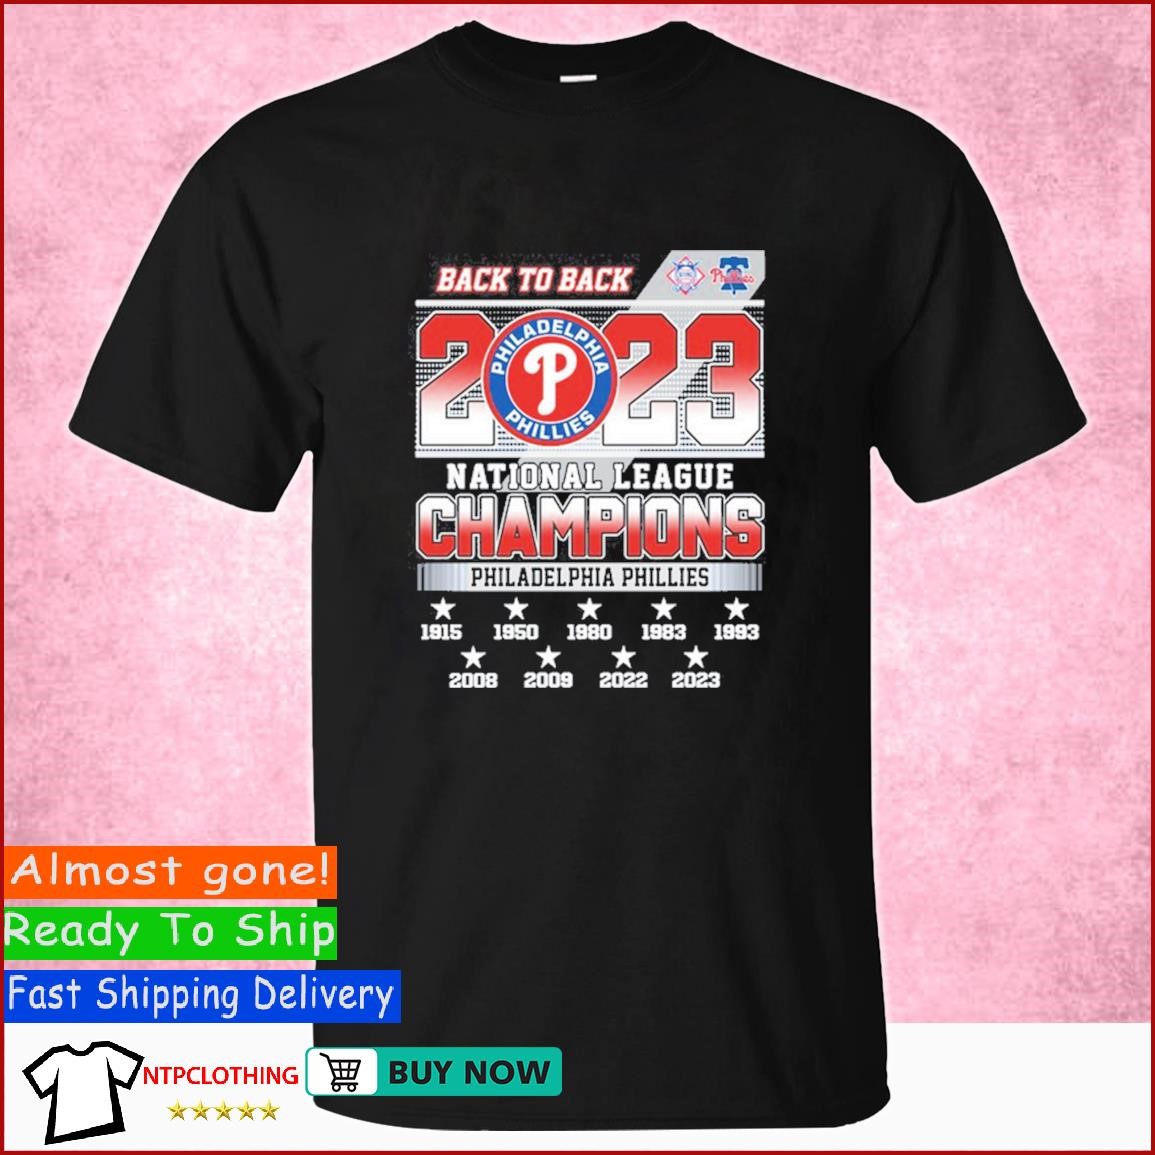 Vintage Philadelphia Phillies '93 NL Champs T-Shirt